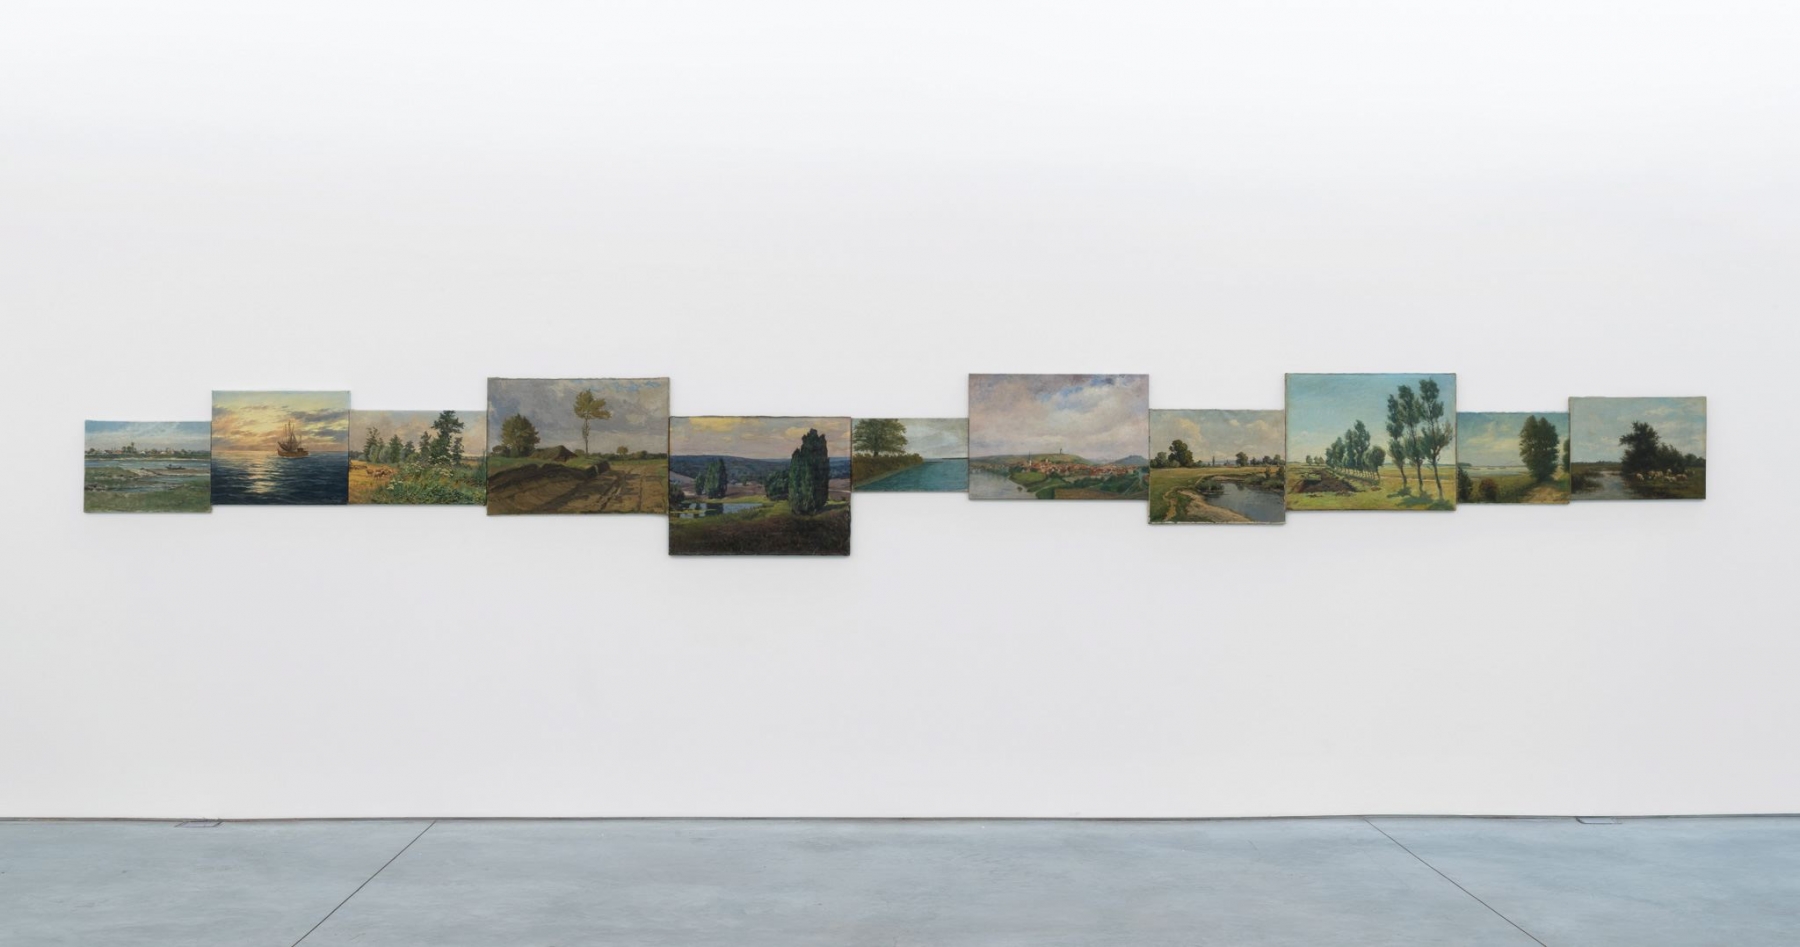 Hans-Peter Feldmann

Horizon

Eleven oil paintings on canvas

34 x 281 1/4 inches (86.4 x 714.4 cm)

HPF 435

&amp;euro;150,000

&amp;nbsp;


INQUIRE